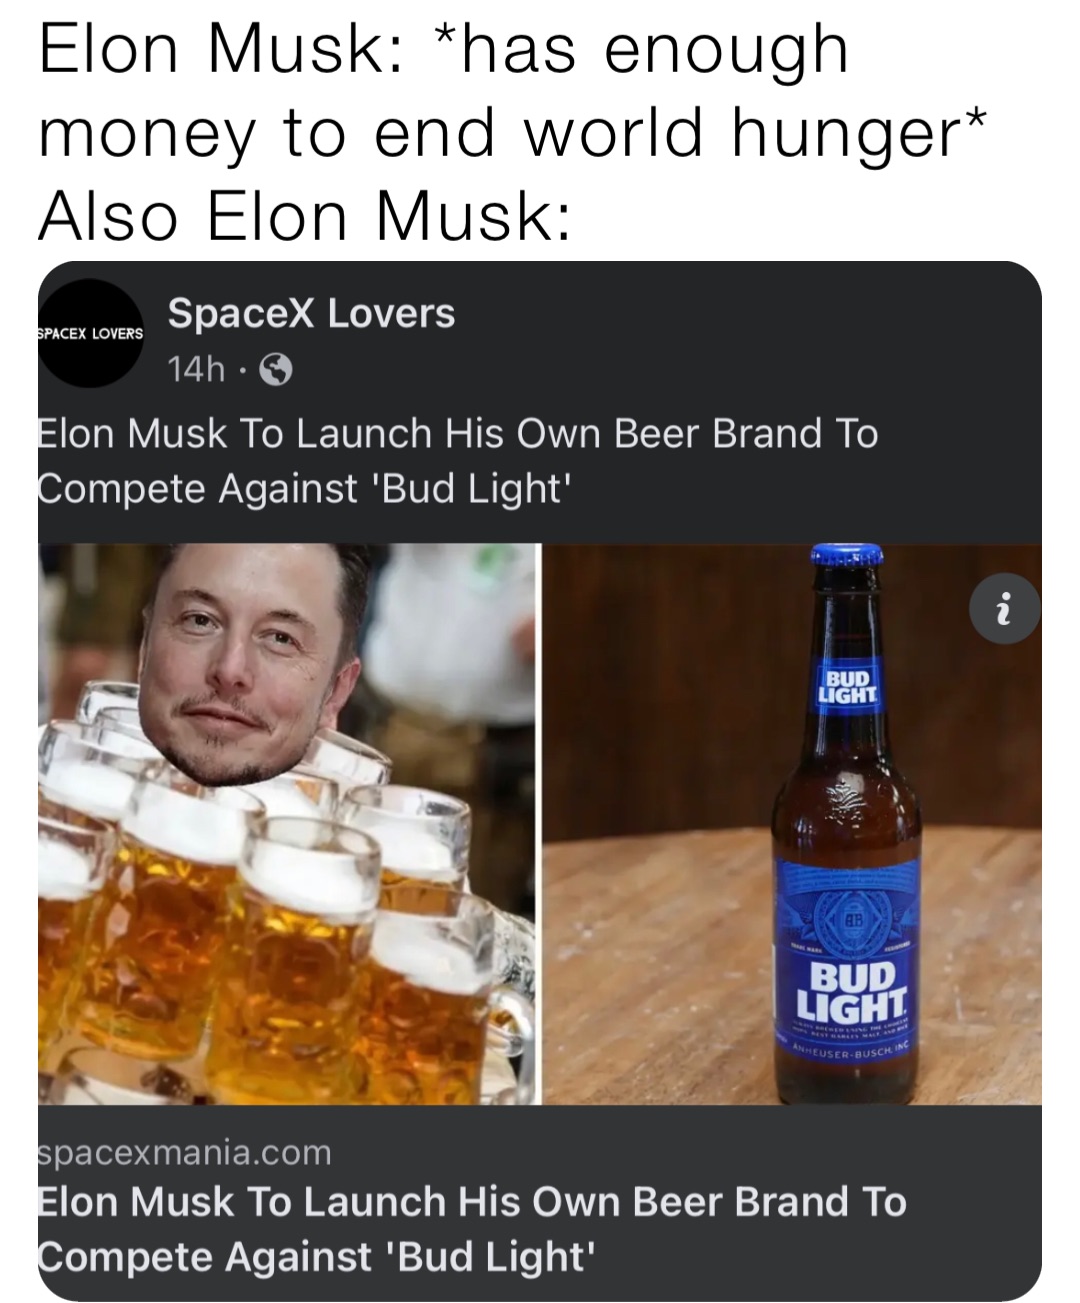 Elon Musk: *has enough money to end world hunger*
Also Elon Musk: